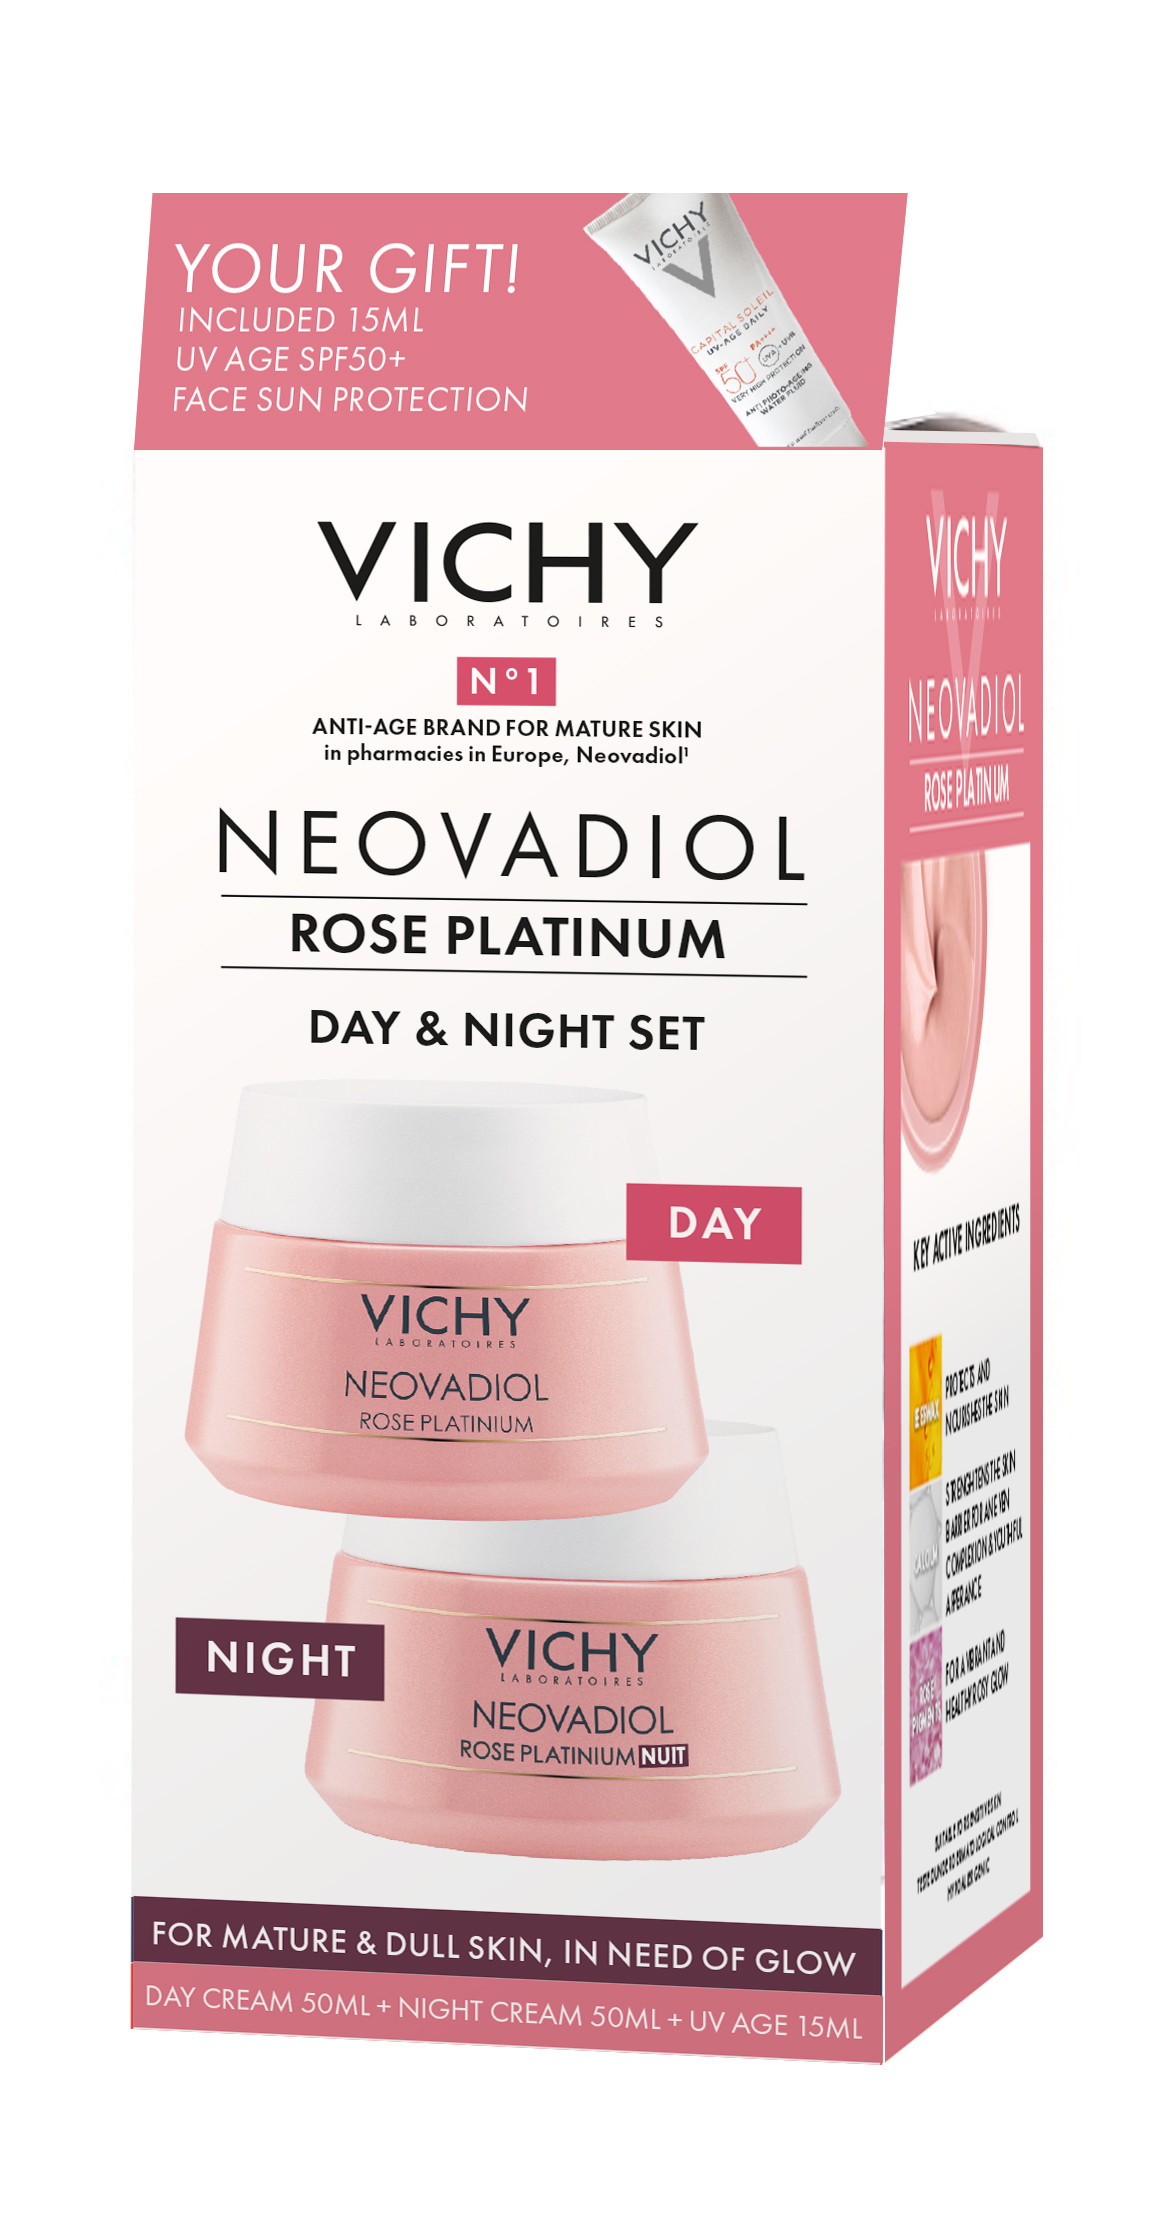 Vichy Neovadiol Rose Platinum Day & Night set